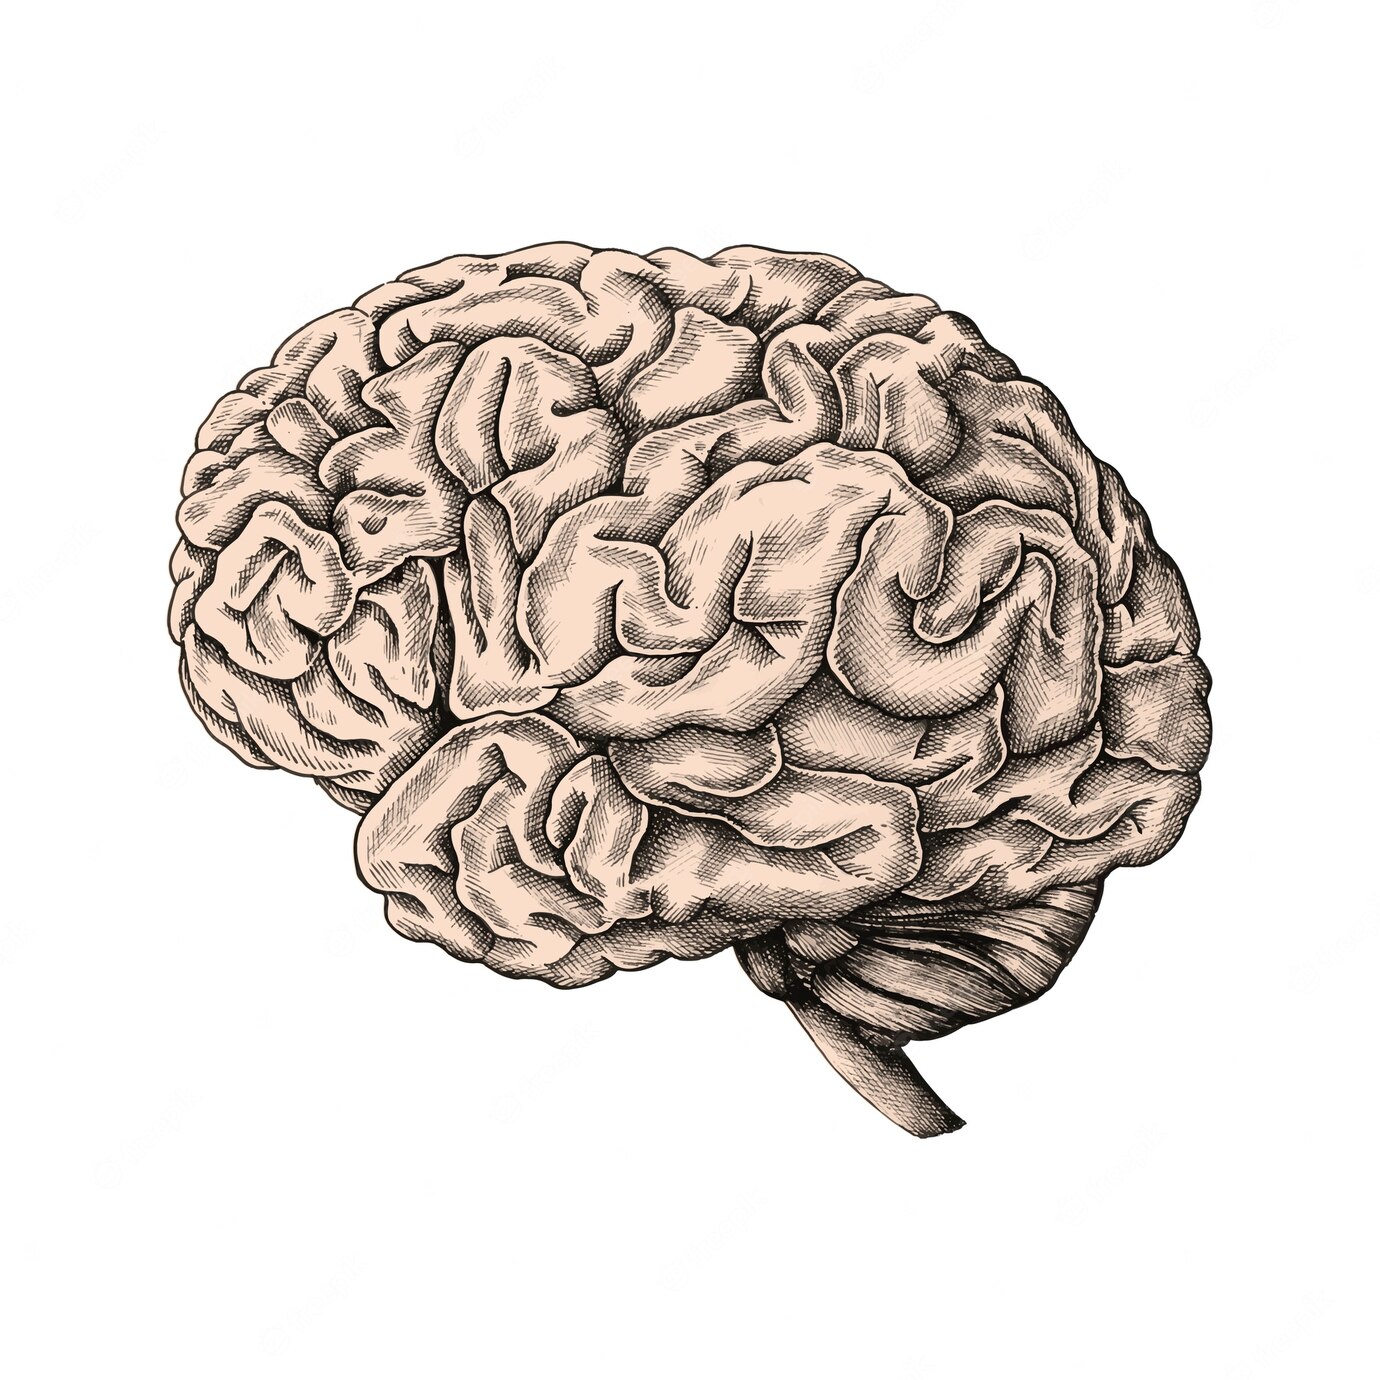 Hand Drawn Human Brain 53876 15781